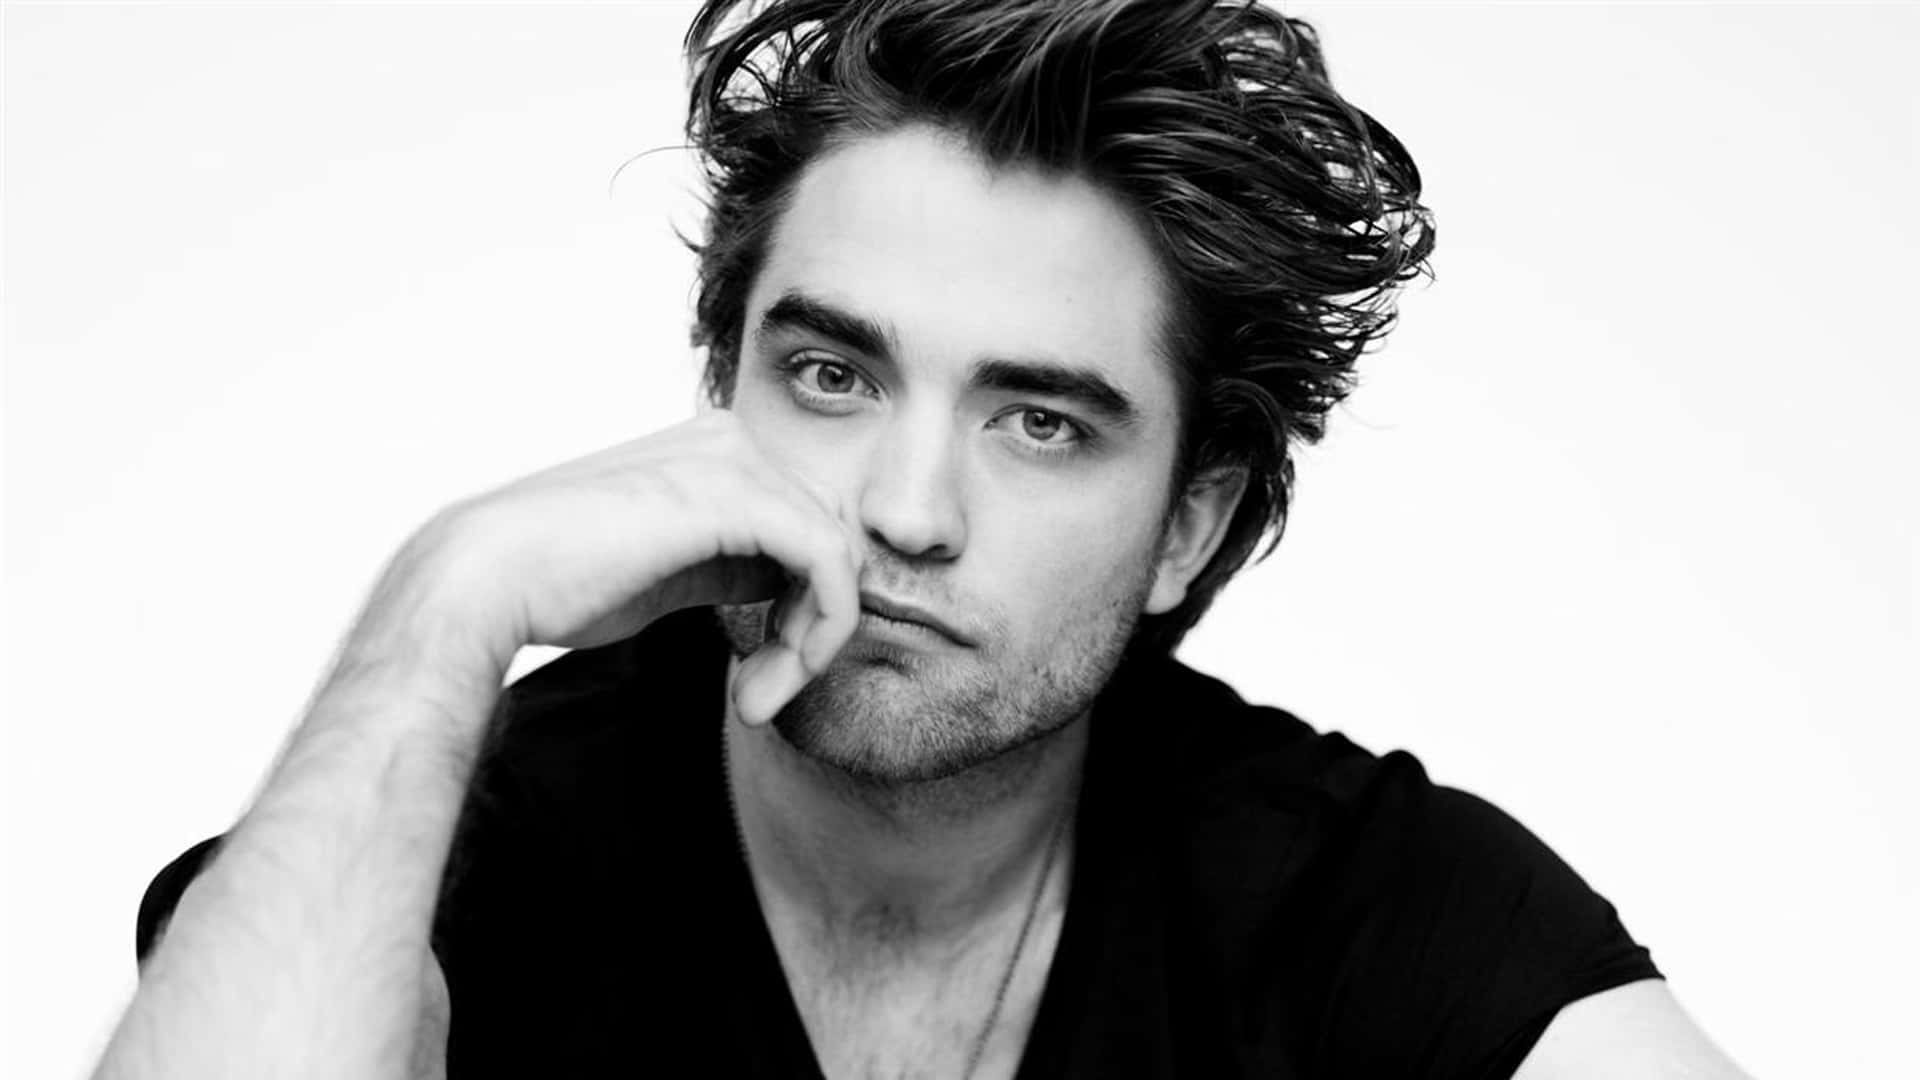 Kristen Stewart Visits Texan Tattoo Parlor - Robert Pattinson By Her Side?  | Celeb Dirty Laundry